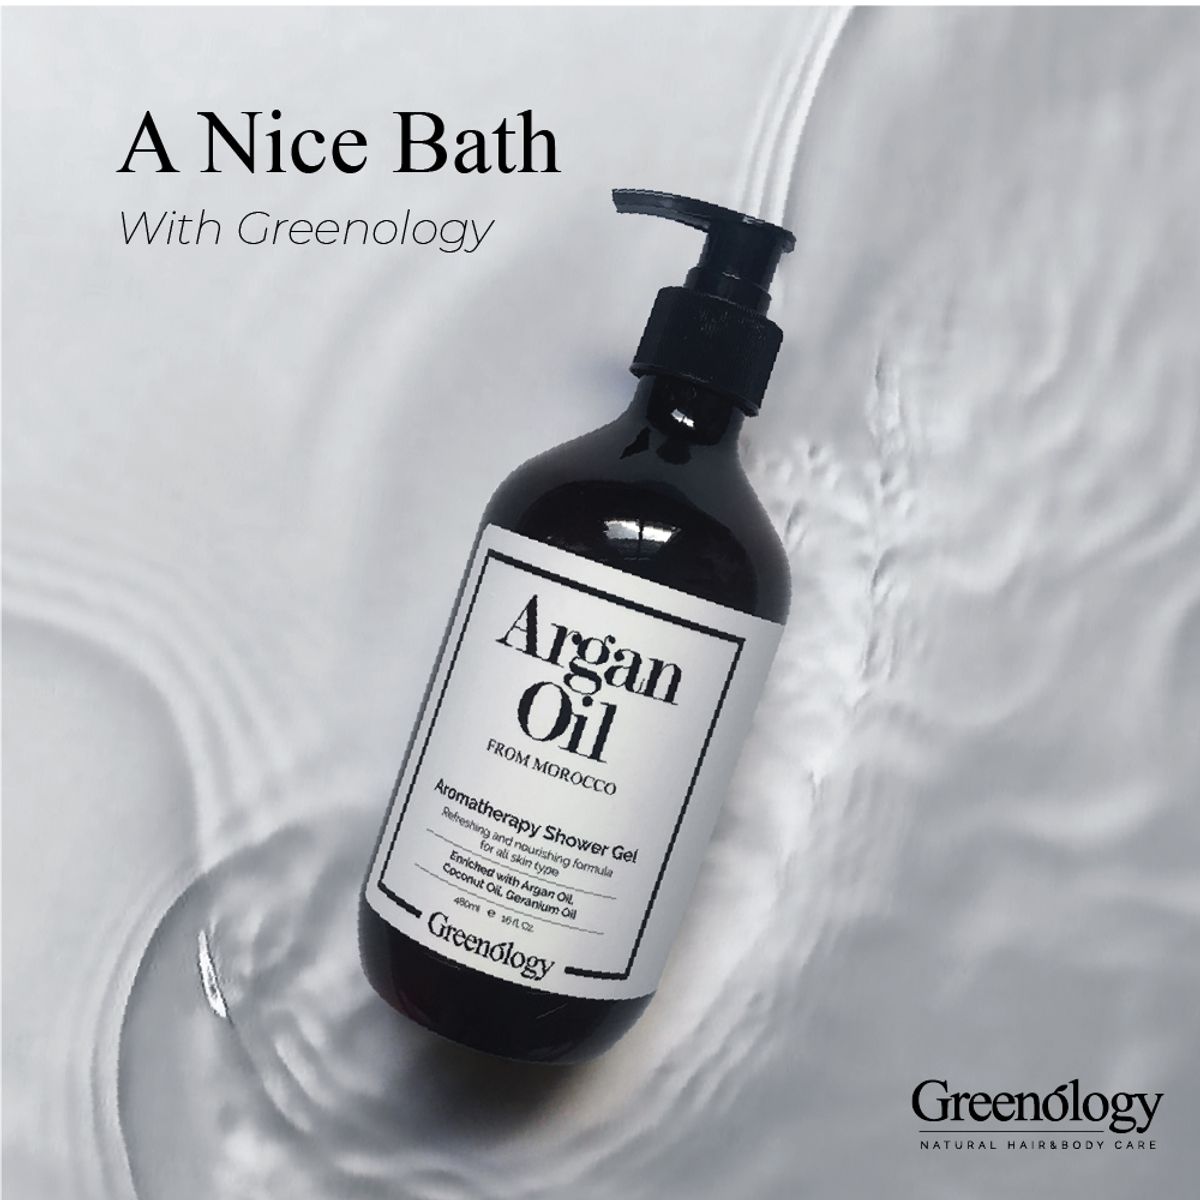 A Nice Bath with Greenology